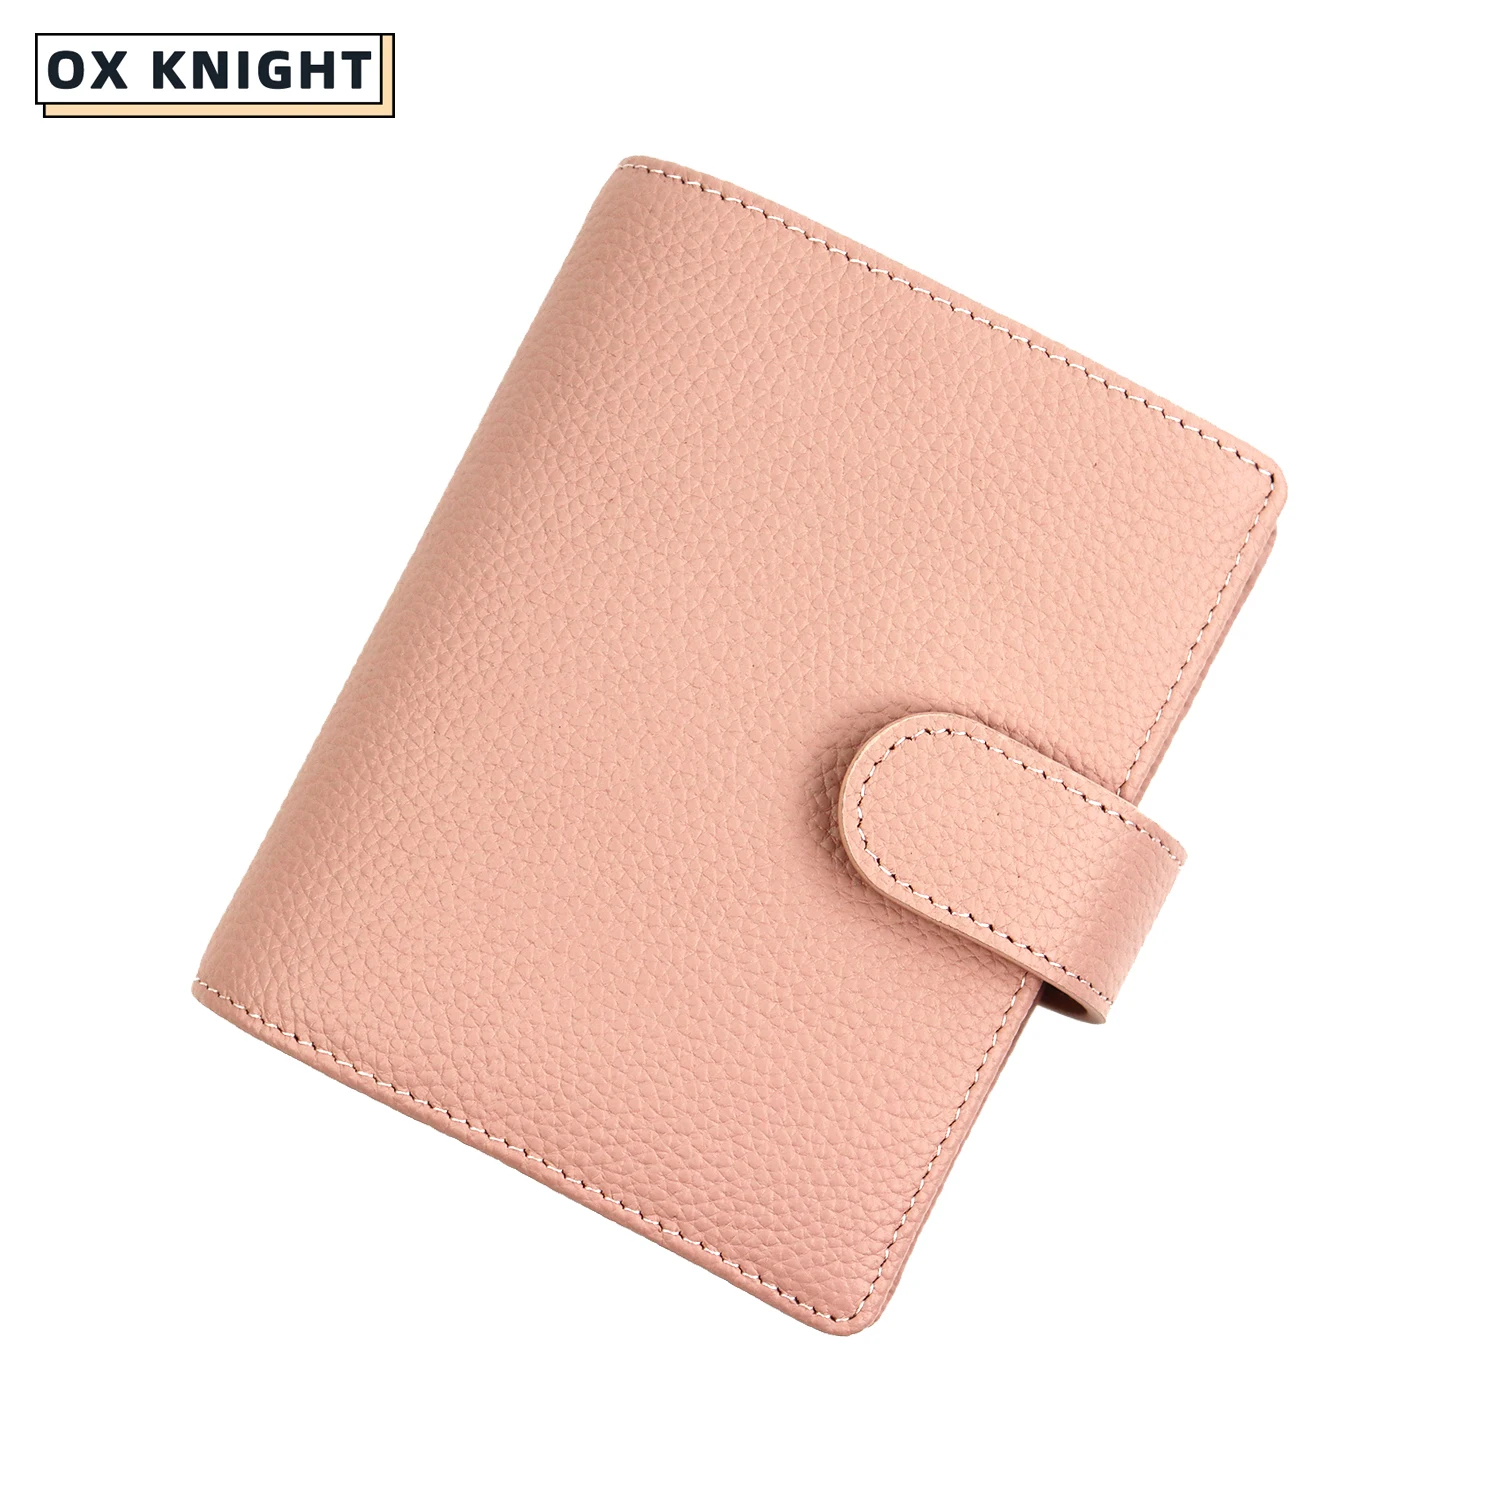 OX KNIGHT Limited A8 Notebook Binder Pebbled Grain Leather 100% Genuine Leather Sketchbook Planner Organizer Agenda 2022